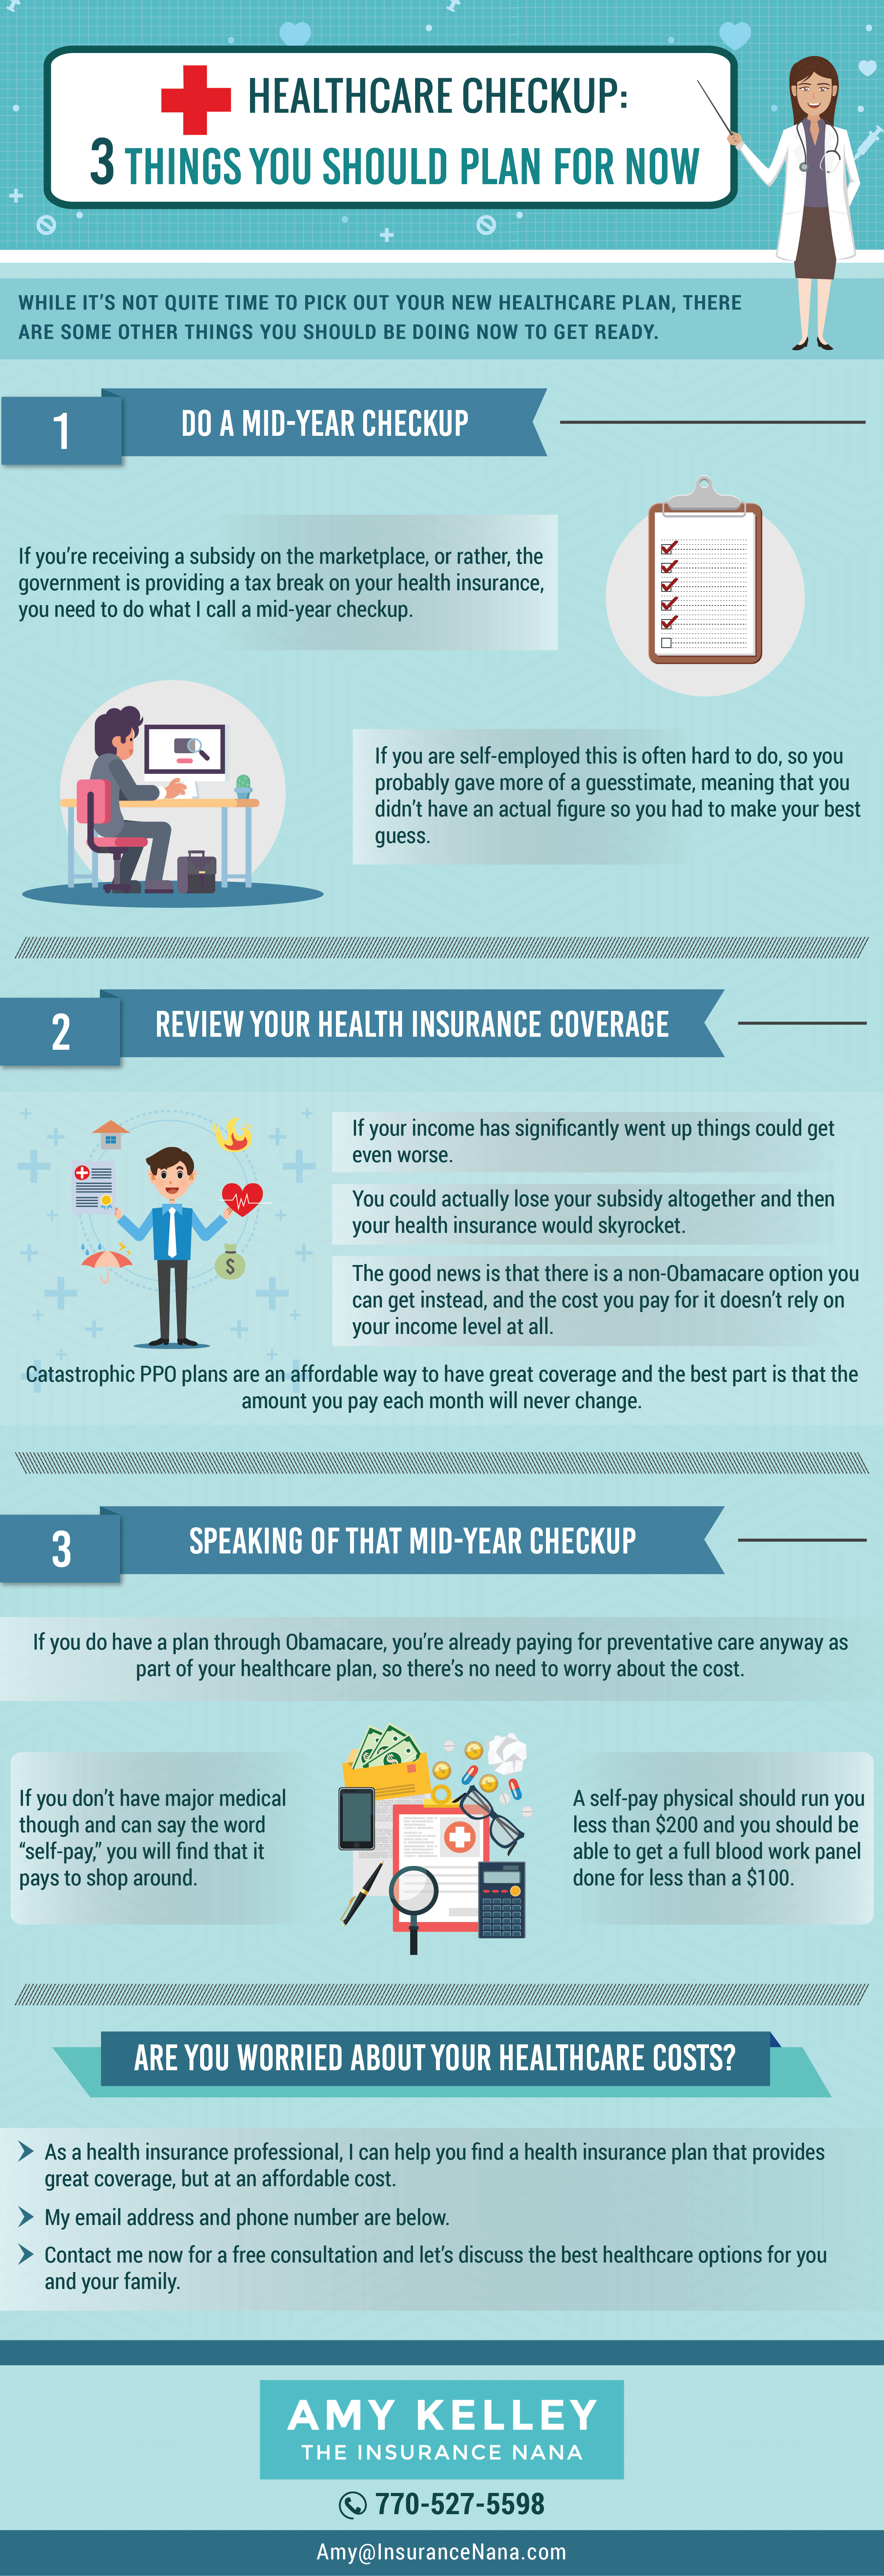 infographic-amy-kelley-insurance-nana-mid-year-health-checkup